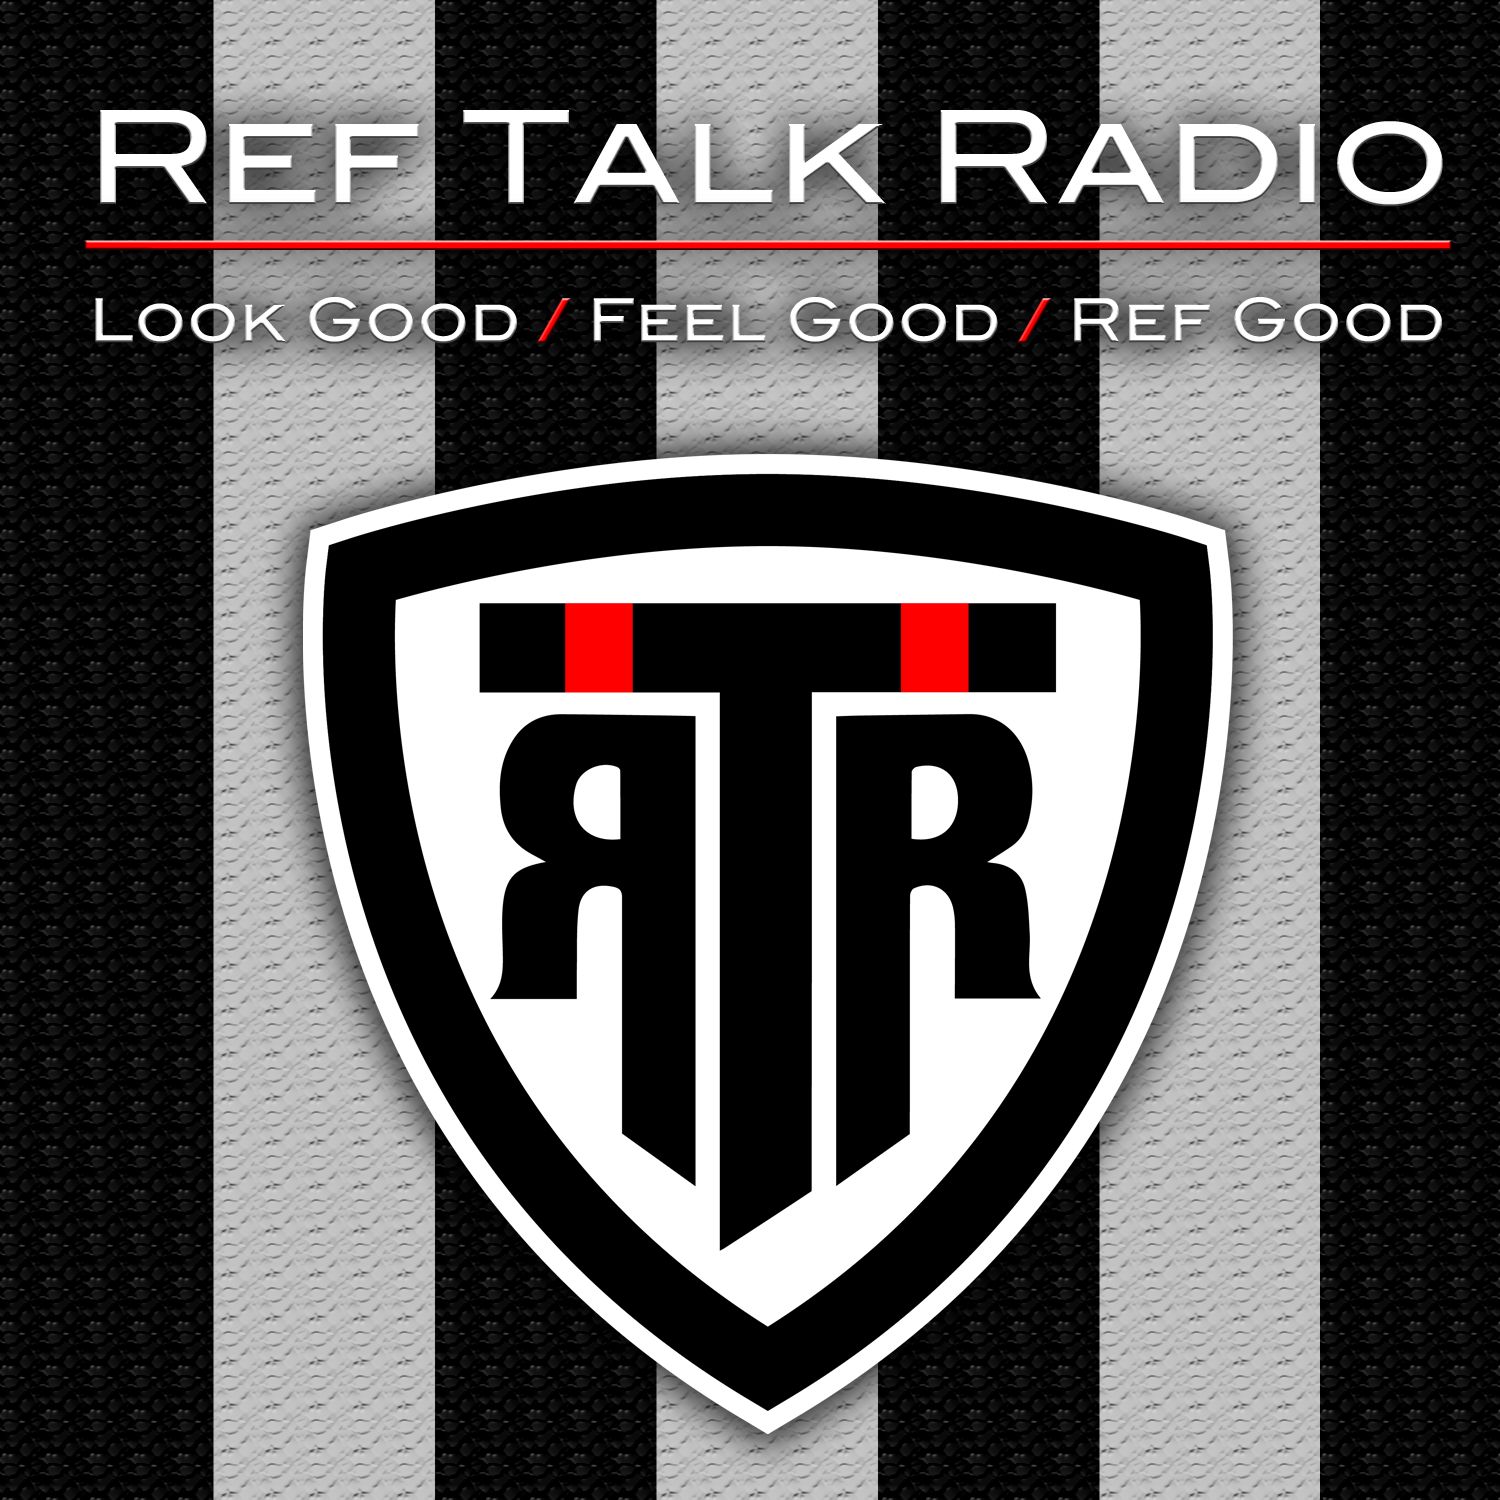 Ref Talk Radio